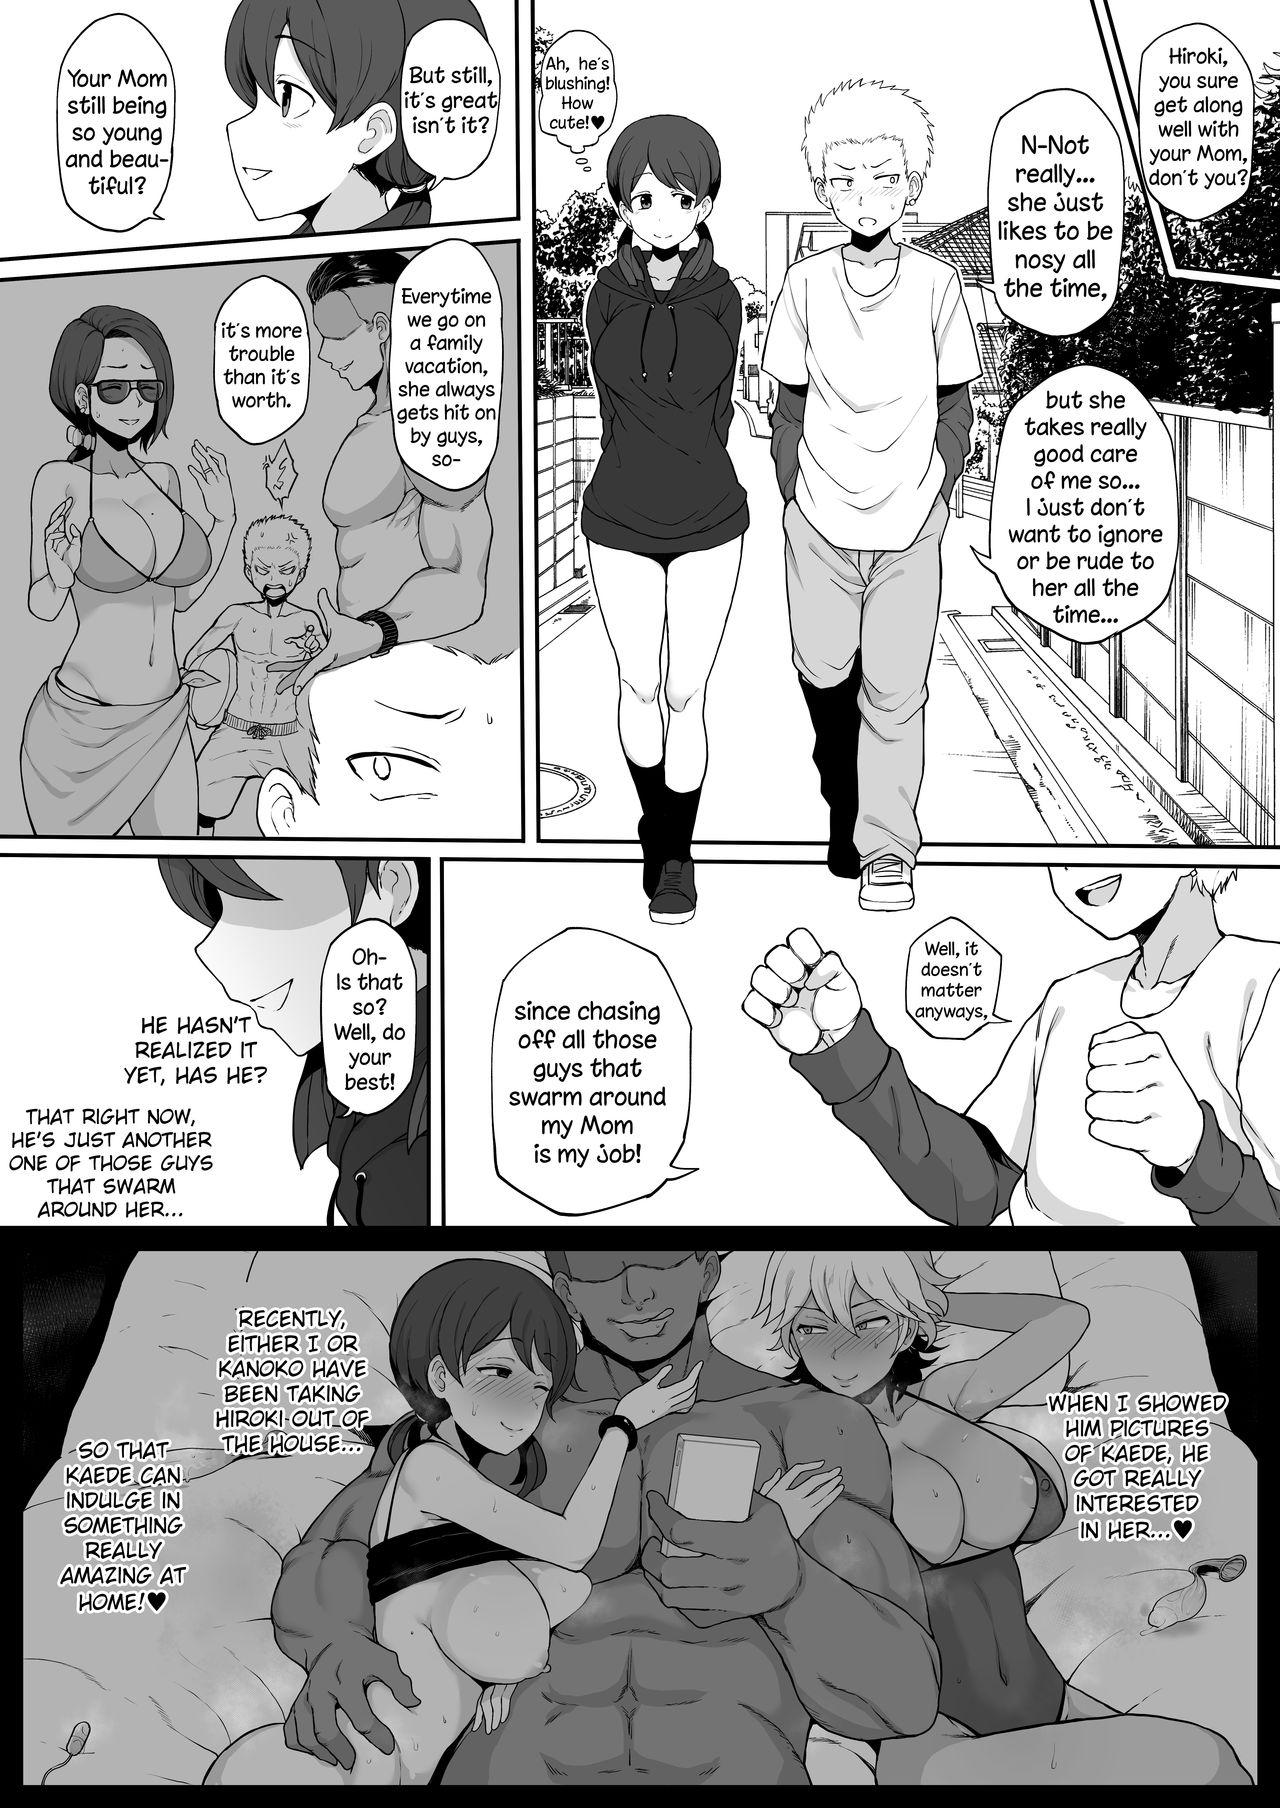 Kokujin no Tenkousei NTR ru Chapters 1-6 part 1 Plus Bonus chapter: Stolen Mother’s Breasts 13